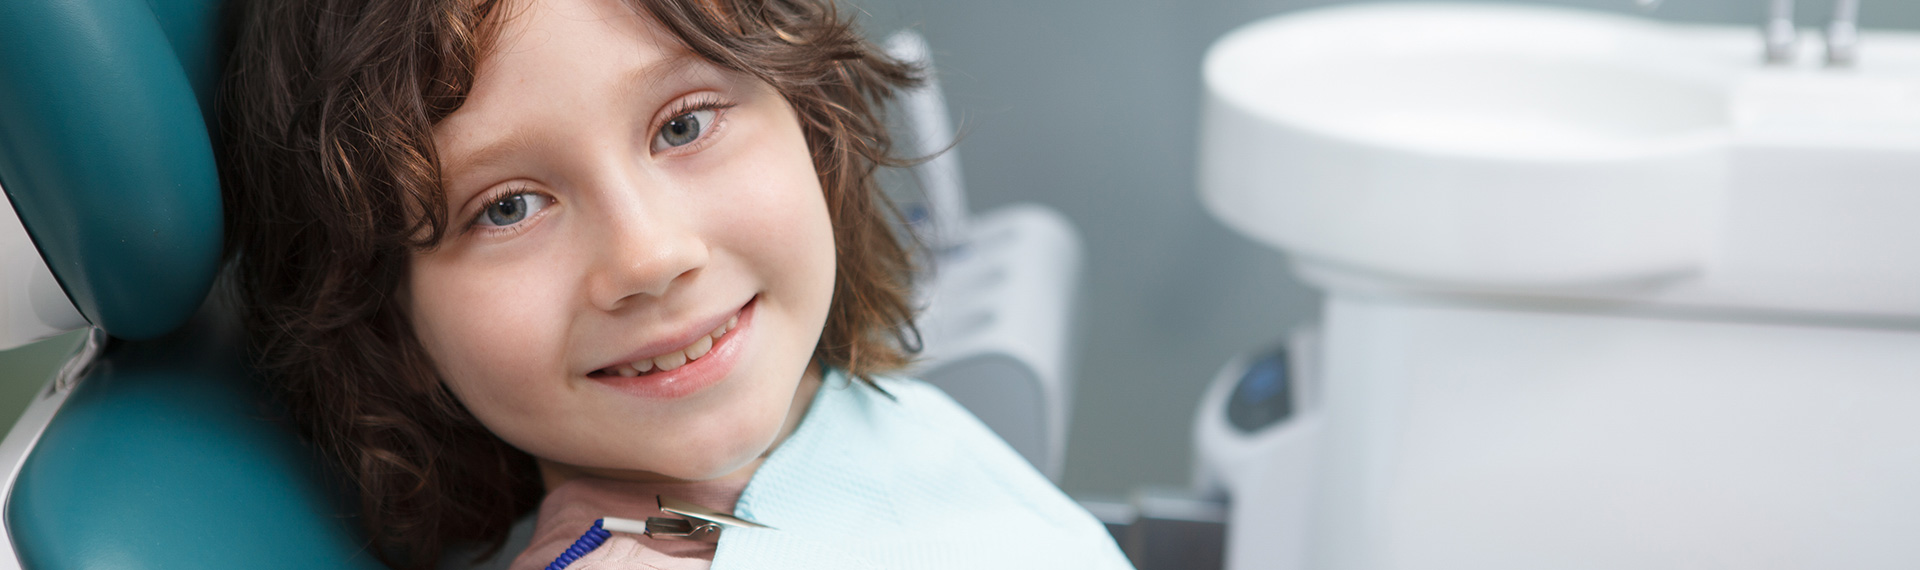 Dental Sealants For Kids Near Me In, Hamilton Ontario Area